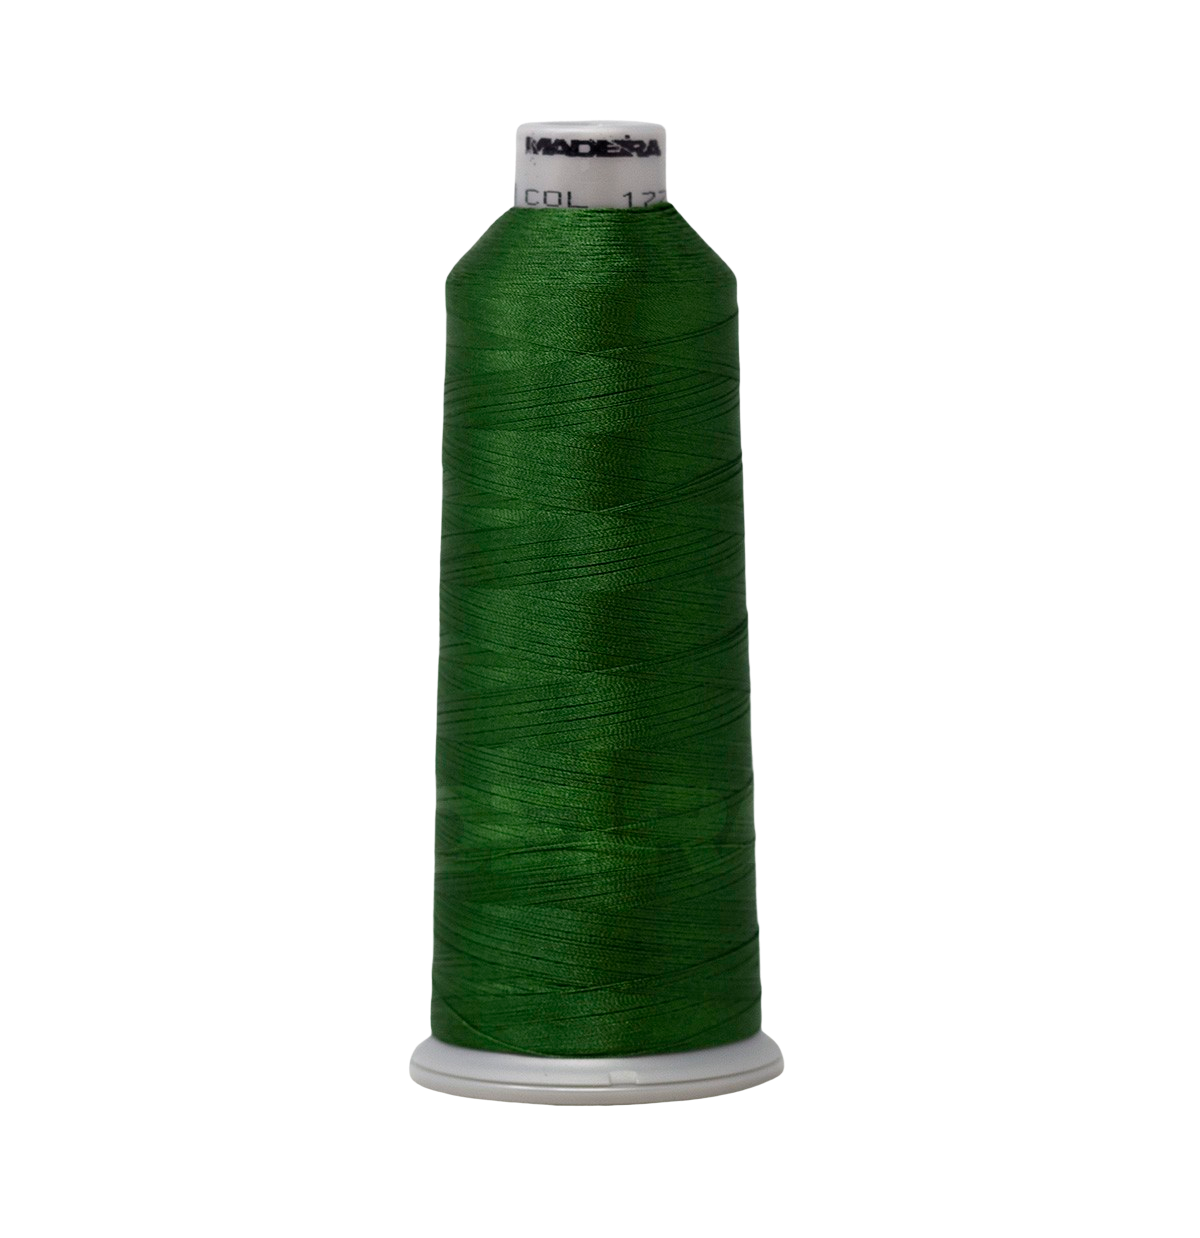 Light Emerald Green 1770 #40 Weight Madeira Polyneon Thread